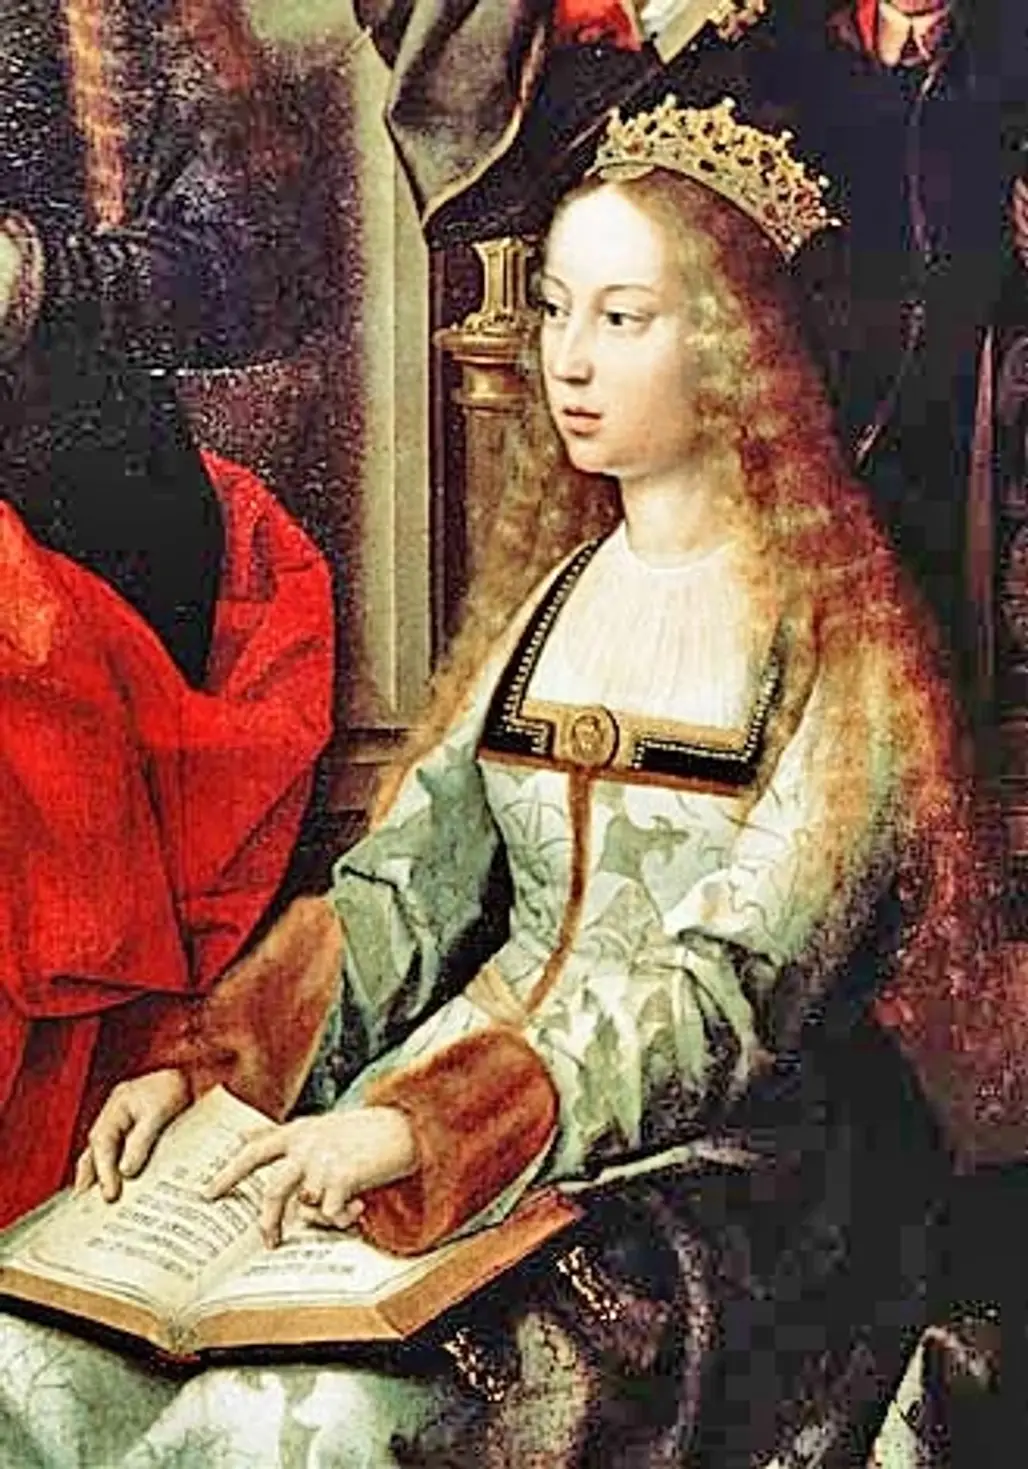 Isabella of Castille